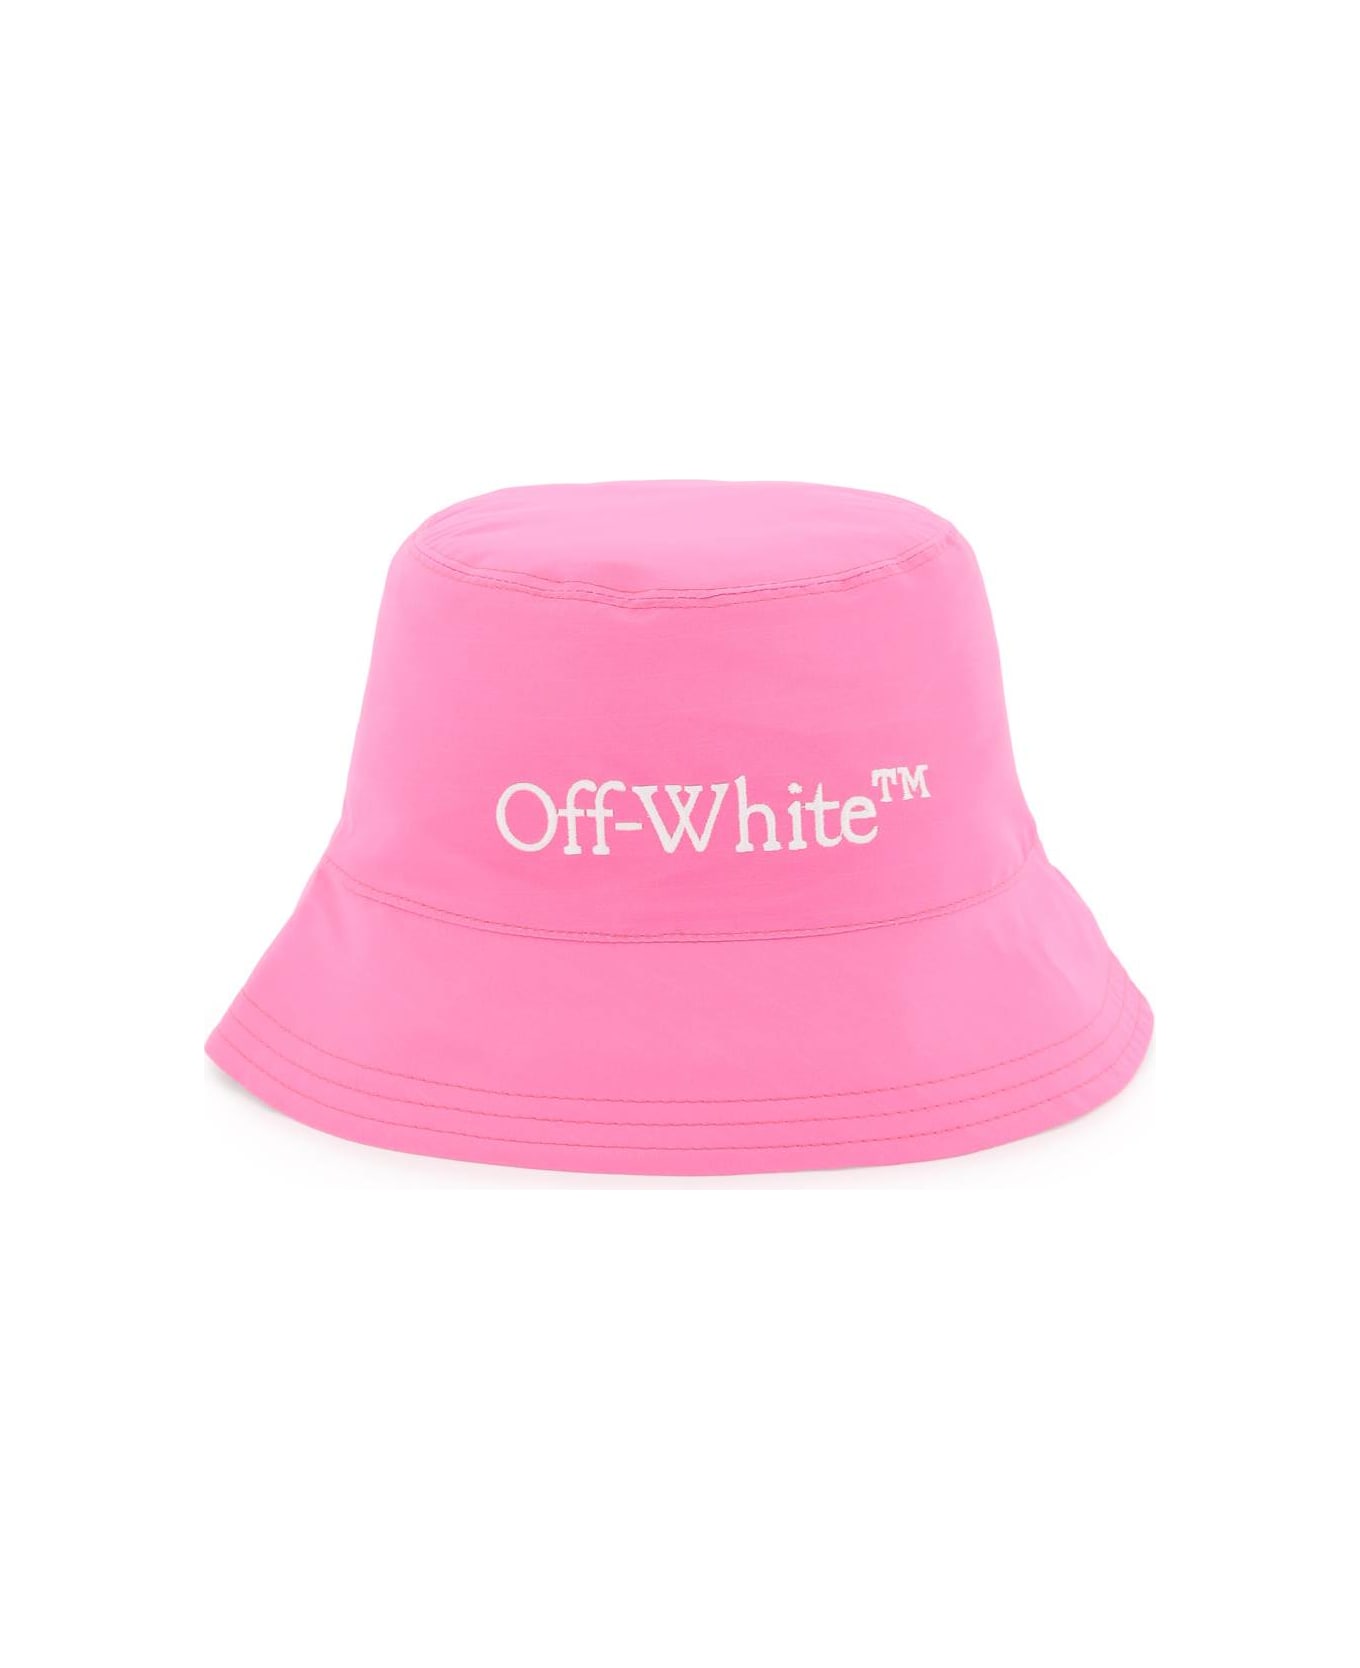 Off-White Reversible Bucket New Hat - FUCHSIA MILIT (Fuchsia)